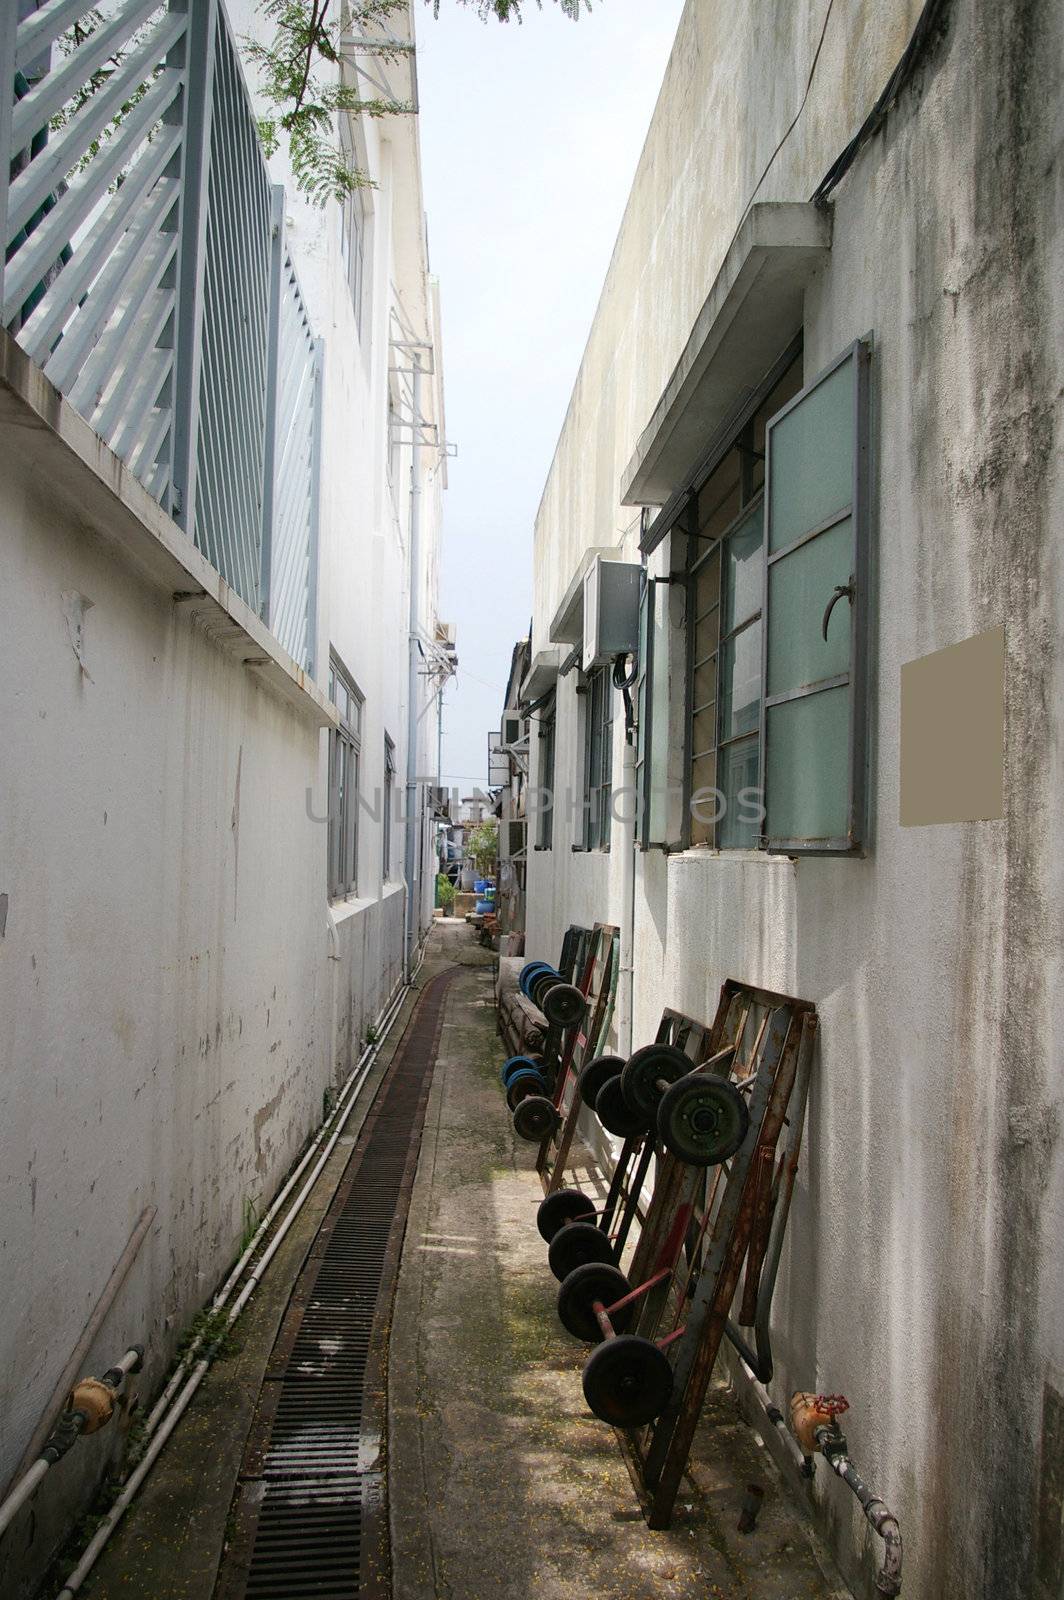 Alley in Hong Kong village